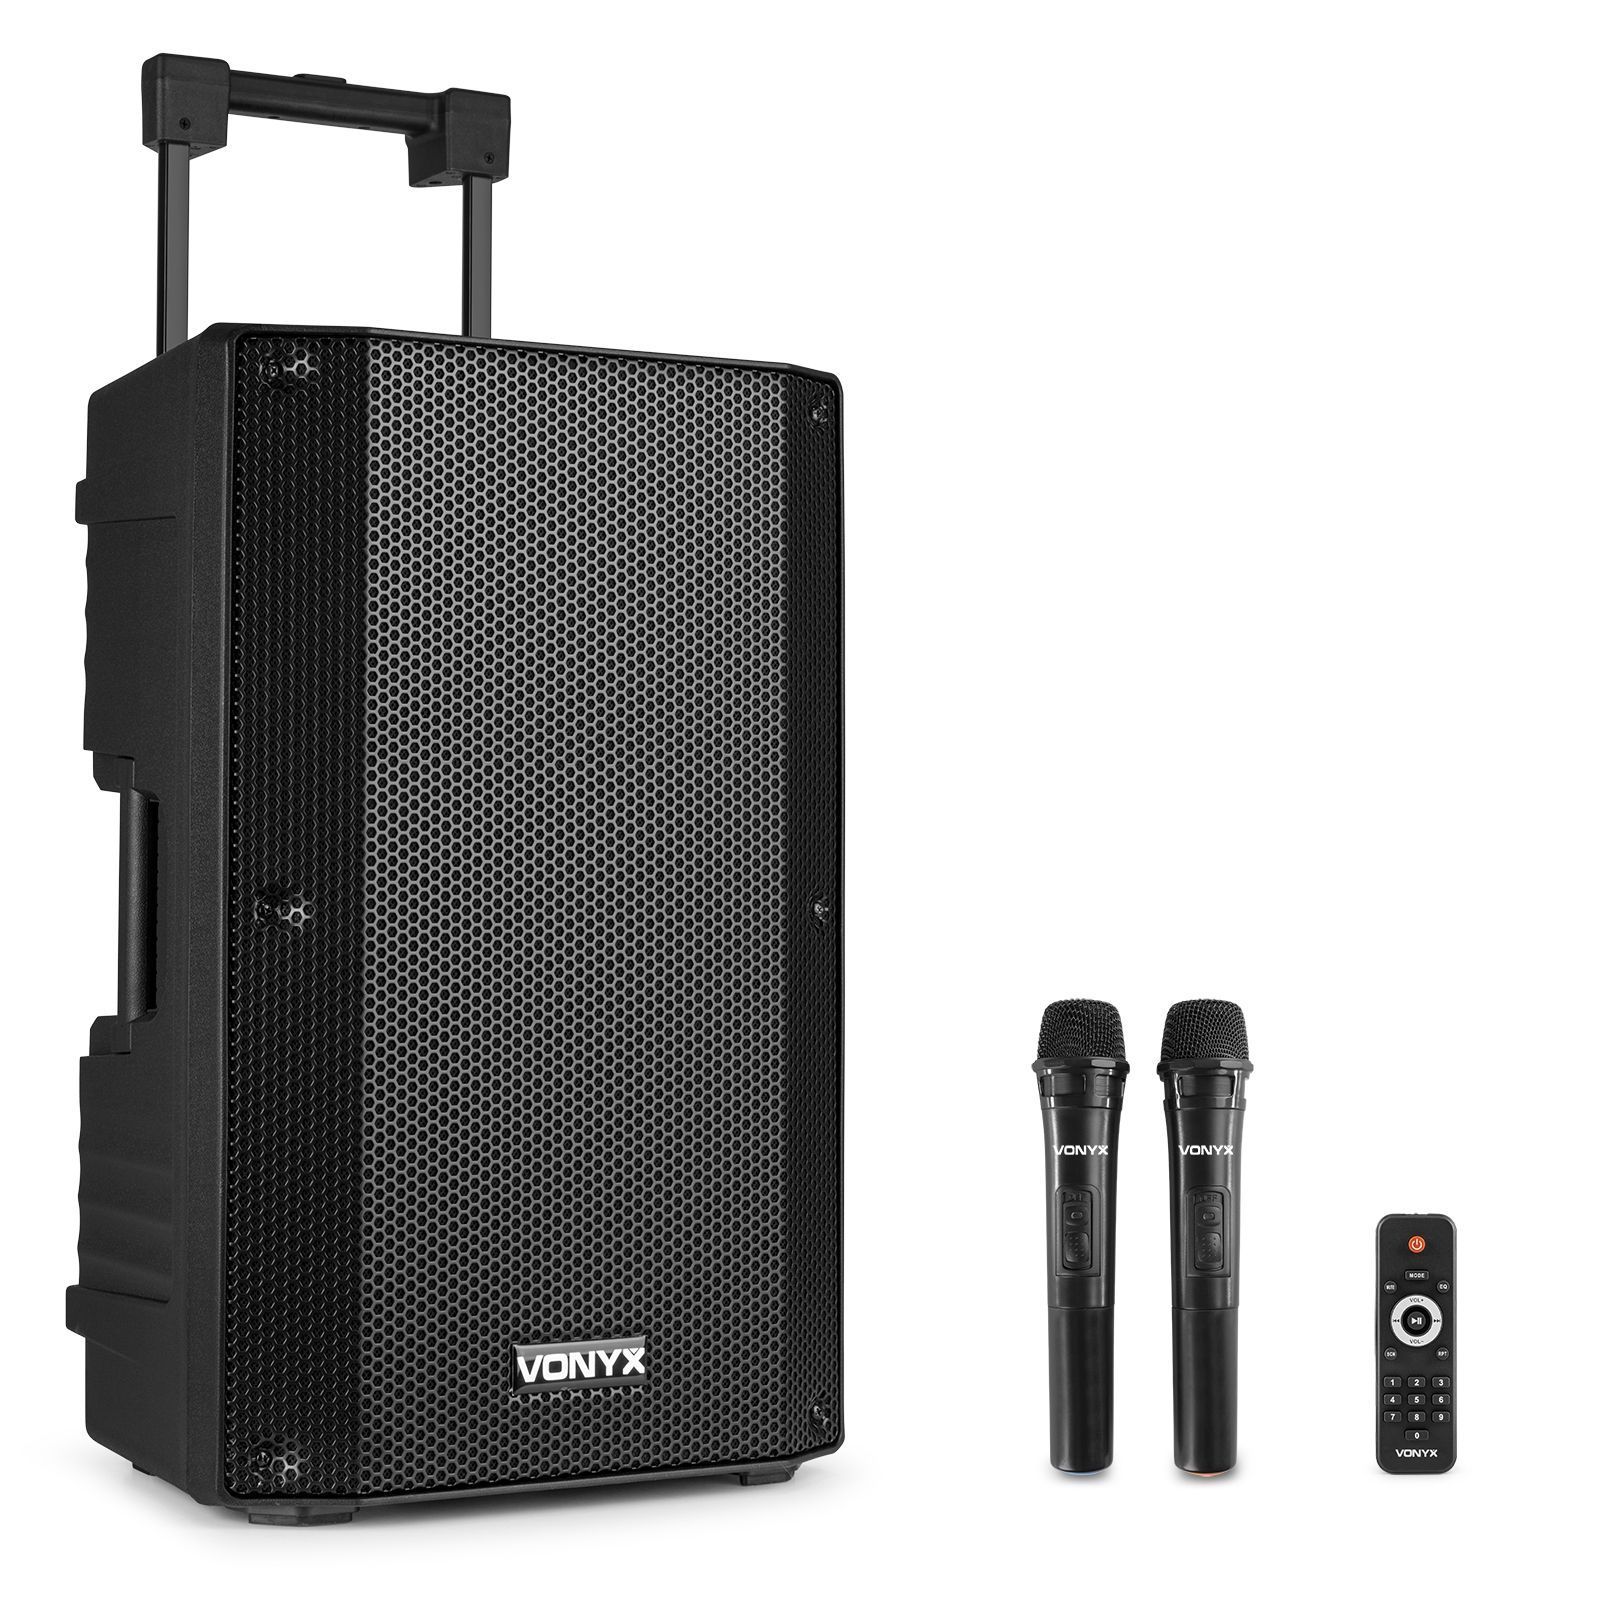 Retourdeal - Vonyx VSA500 ABS 12" portable speaker met Bluetooth en 2x